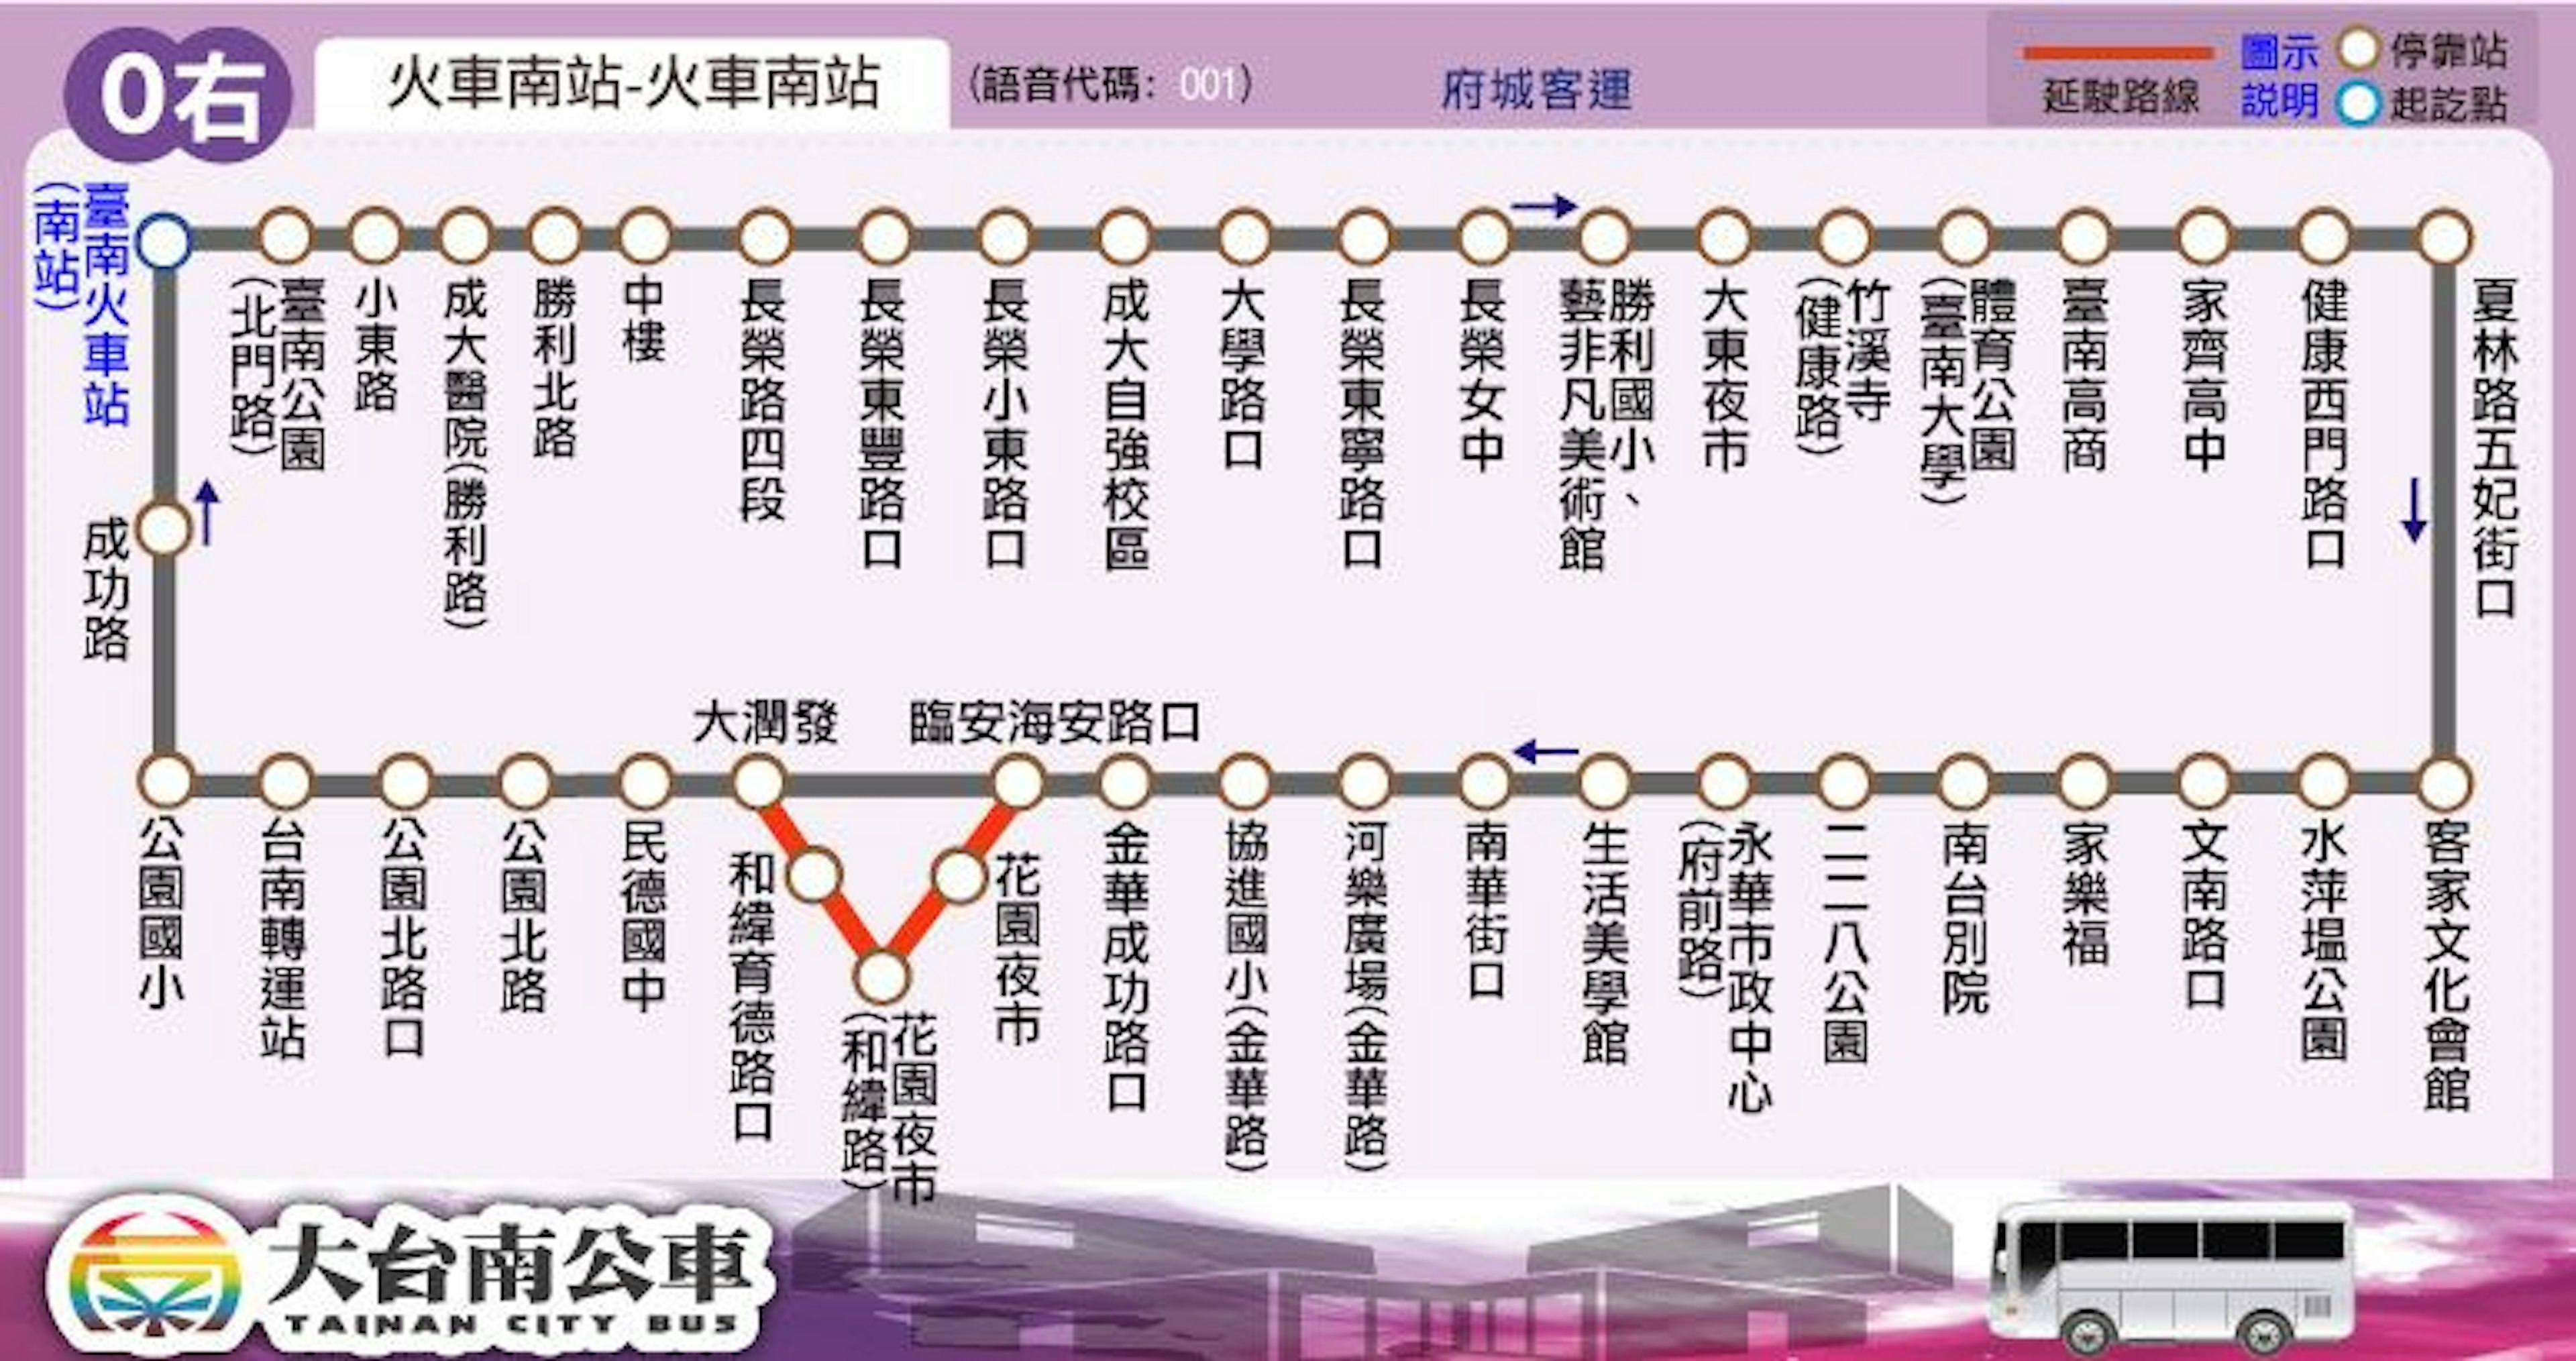 0RRoute Map-台南 Bus